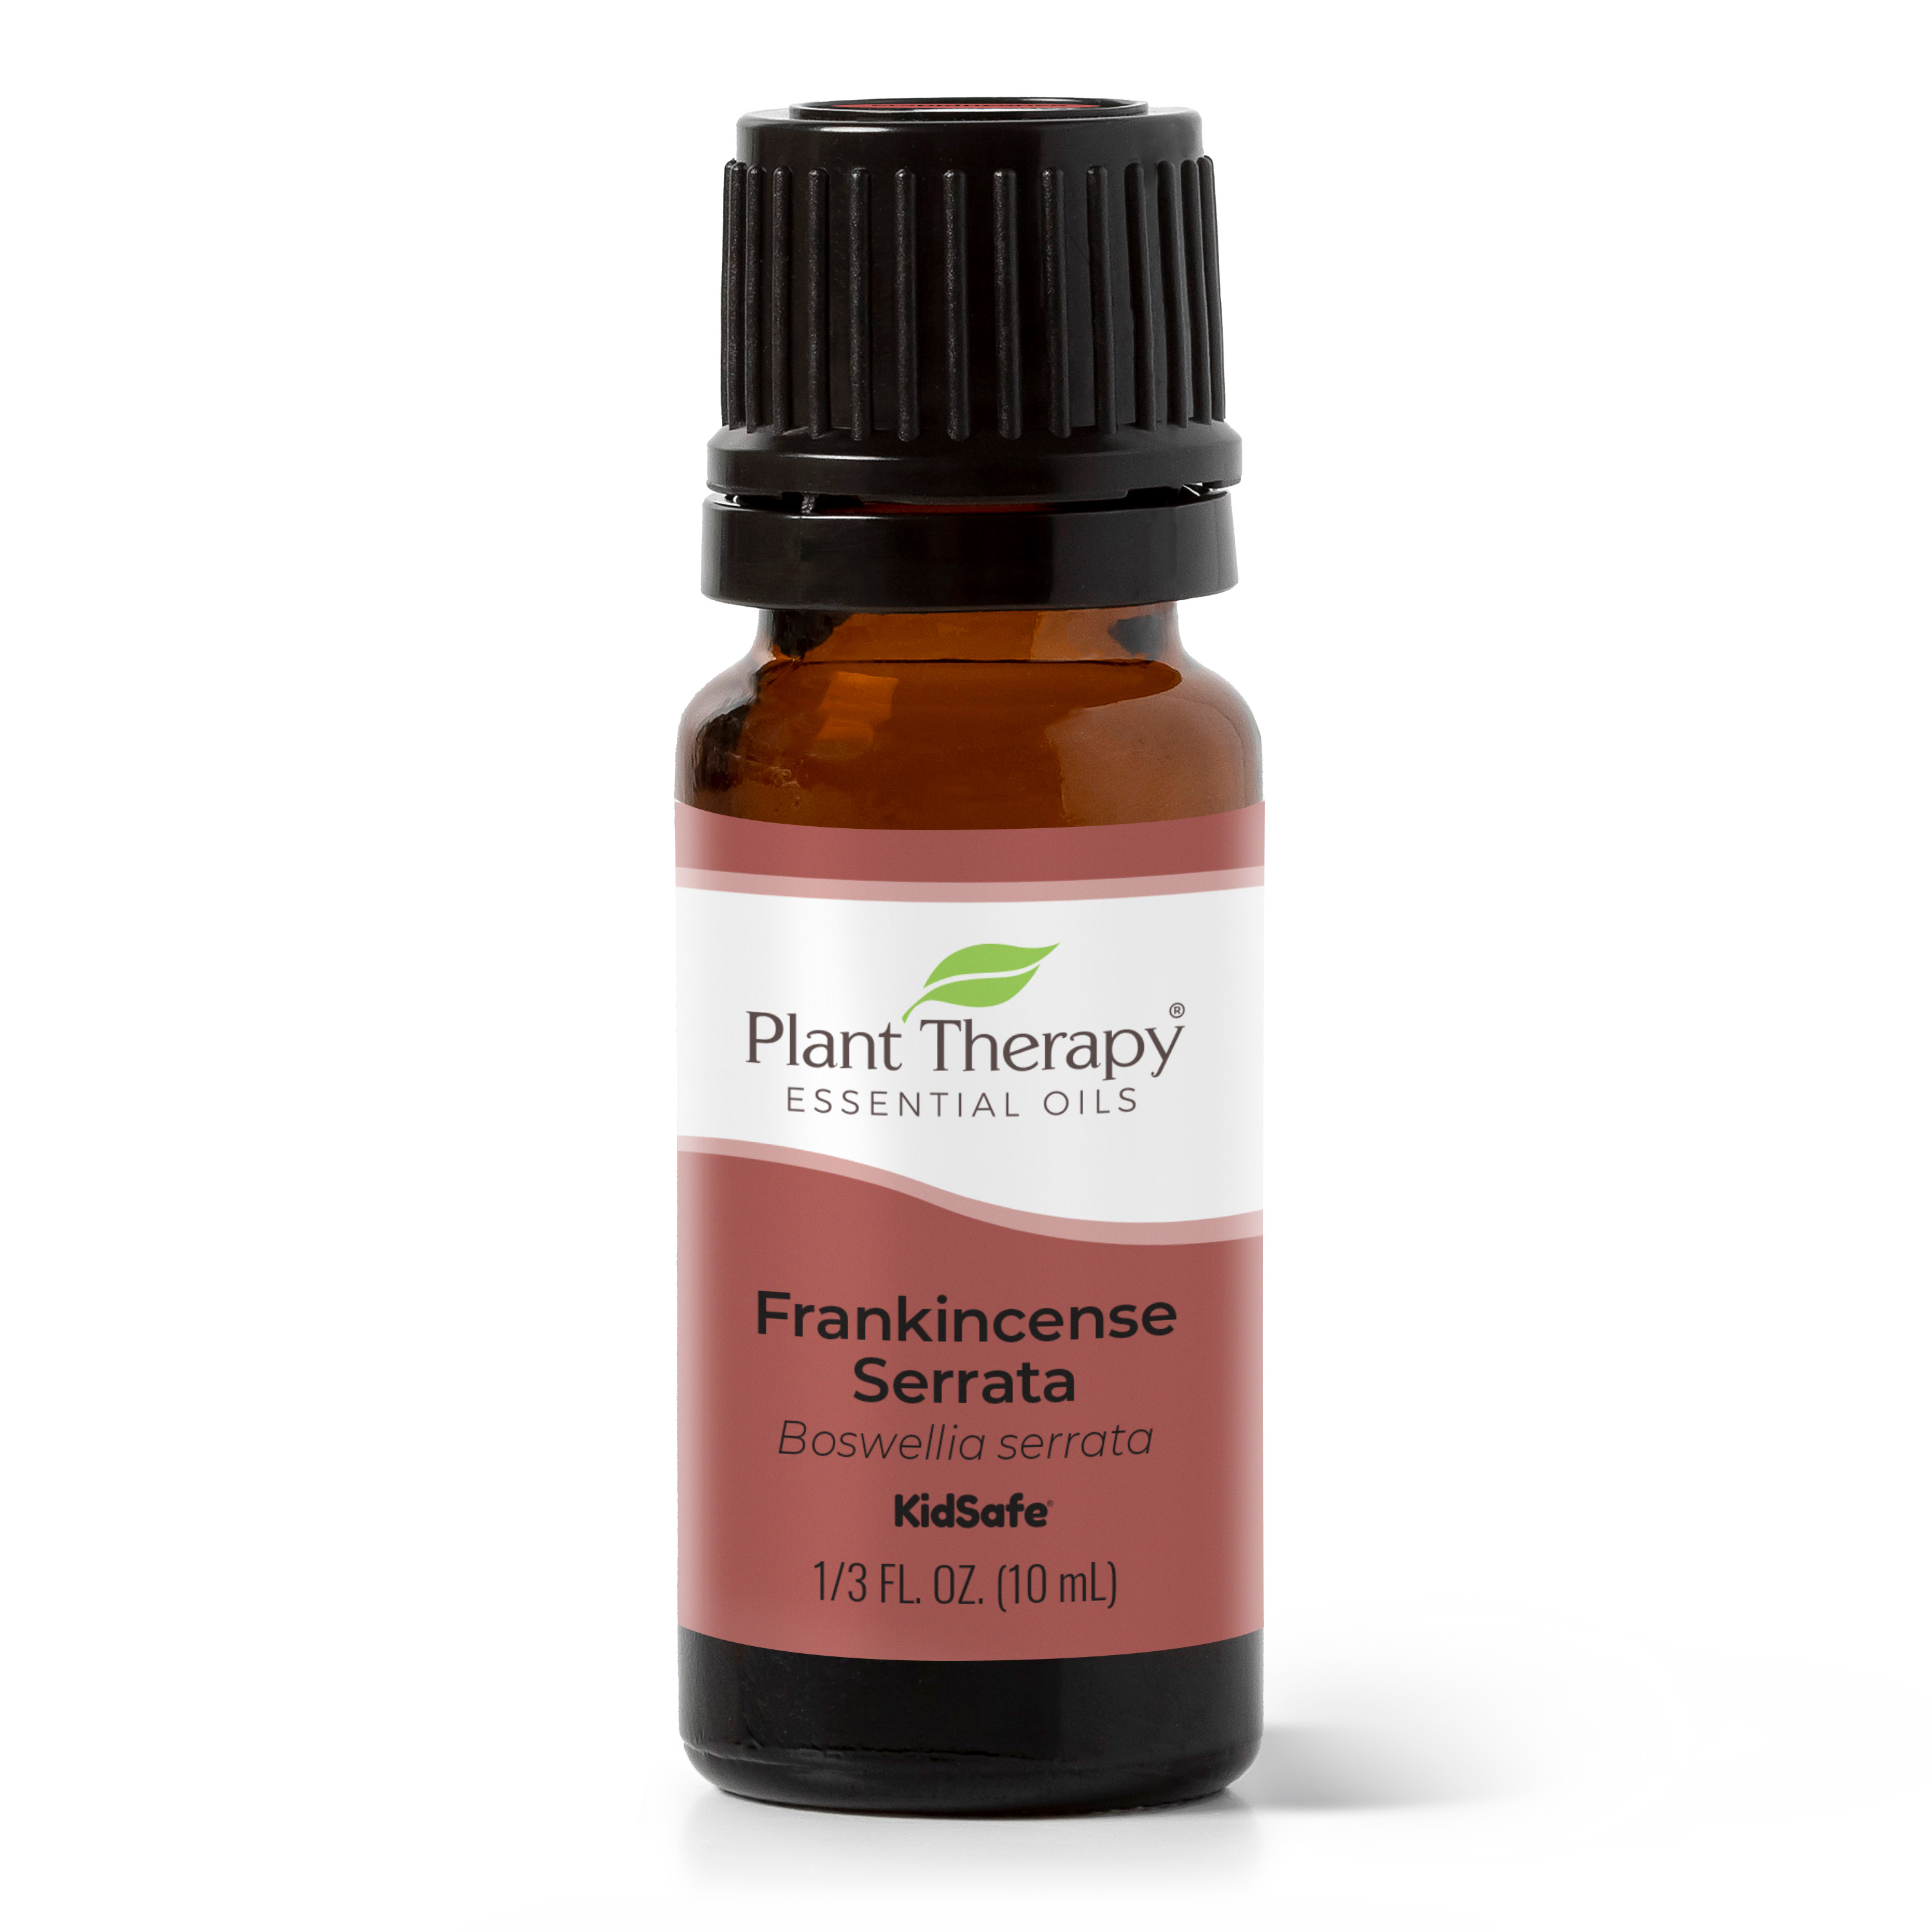 Plant Therapy Frankincense Serrata Essential Oil 100% Pure, Undiluted, Natural Aromatherapy, Therapeutic Grade 10 mL (1/3 oz) - image 1 of 7